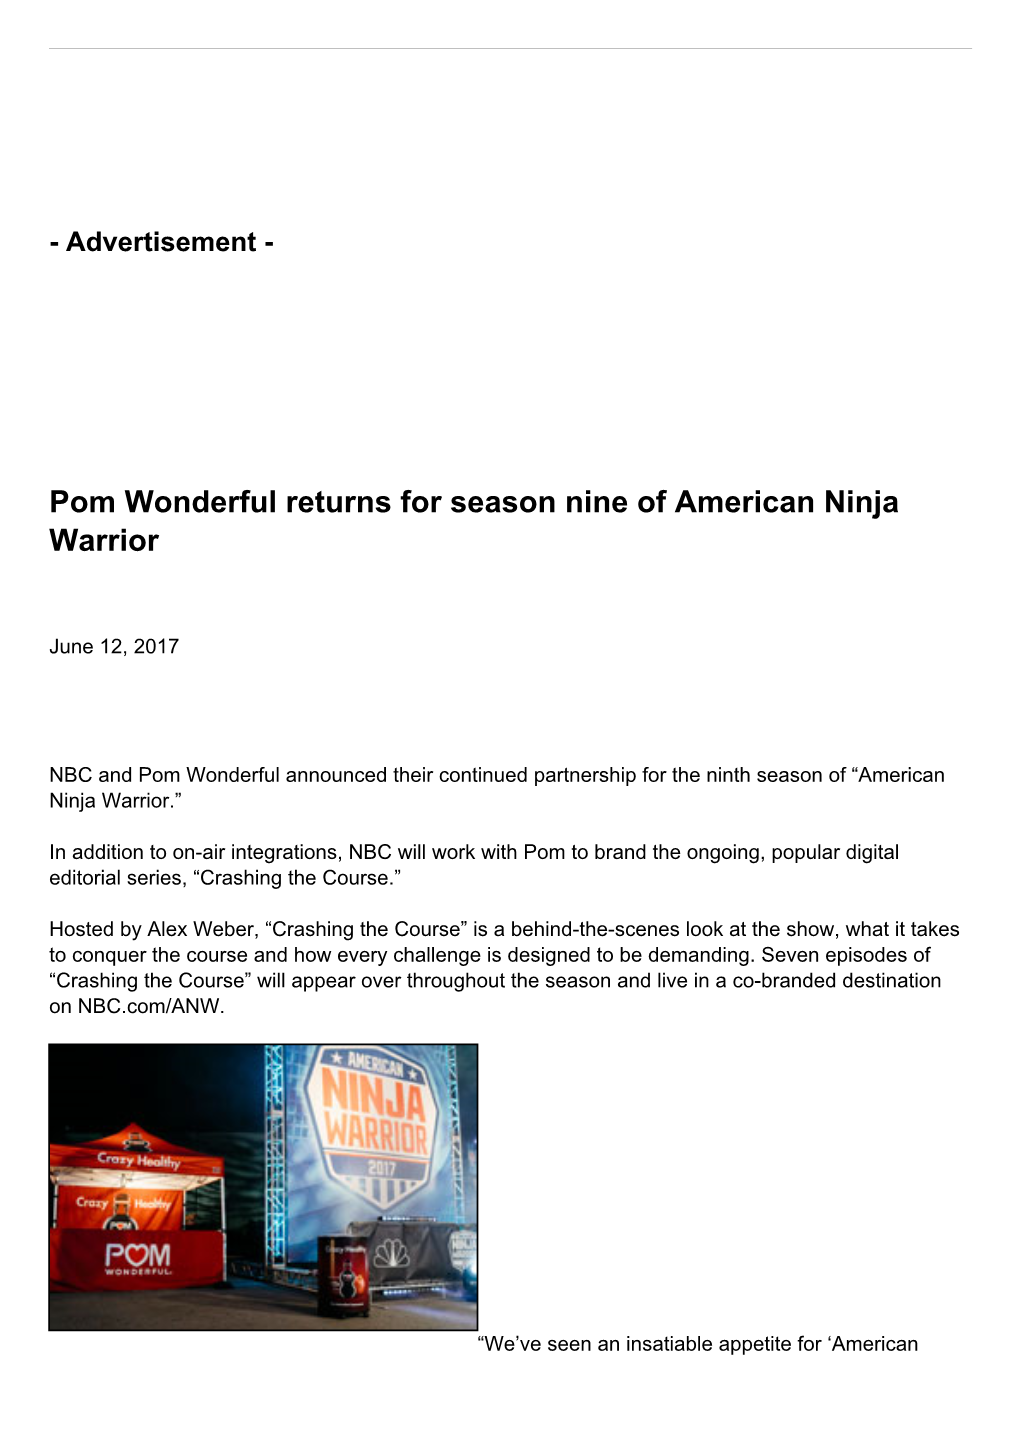 Pom Wonderful Returns for Season Nine of American Ninja Warrior